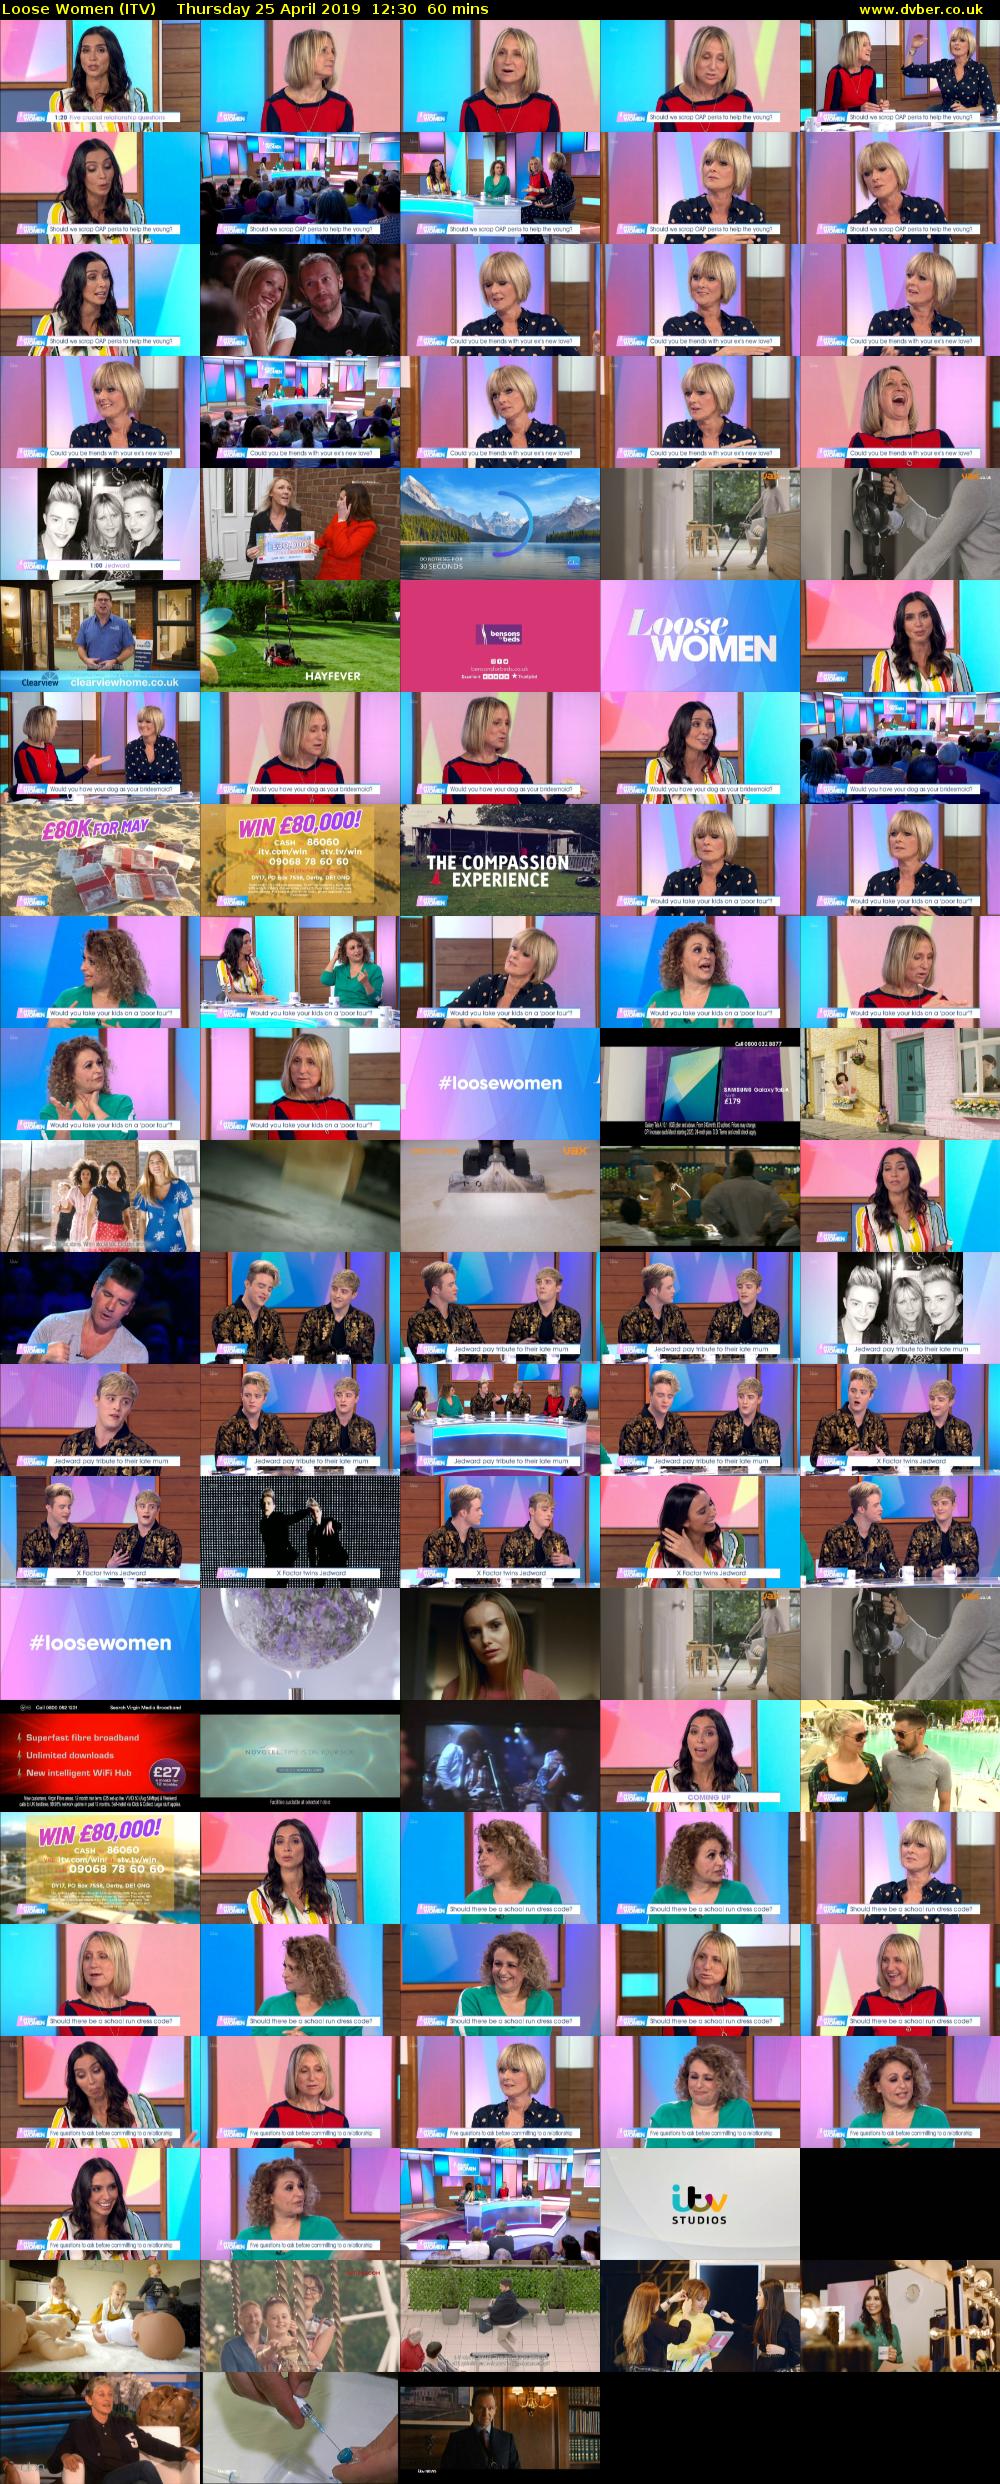 Loose Women (ITV) Thursday 25 April 2019 12:30 - 13:30